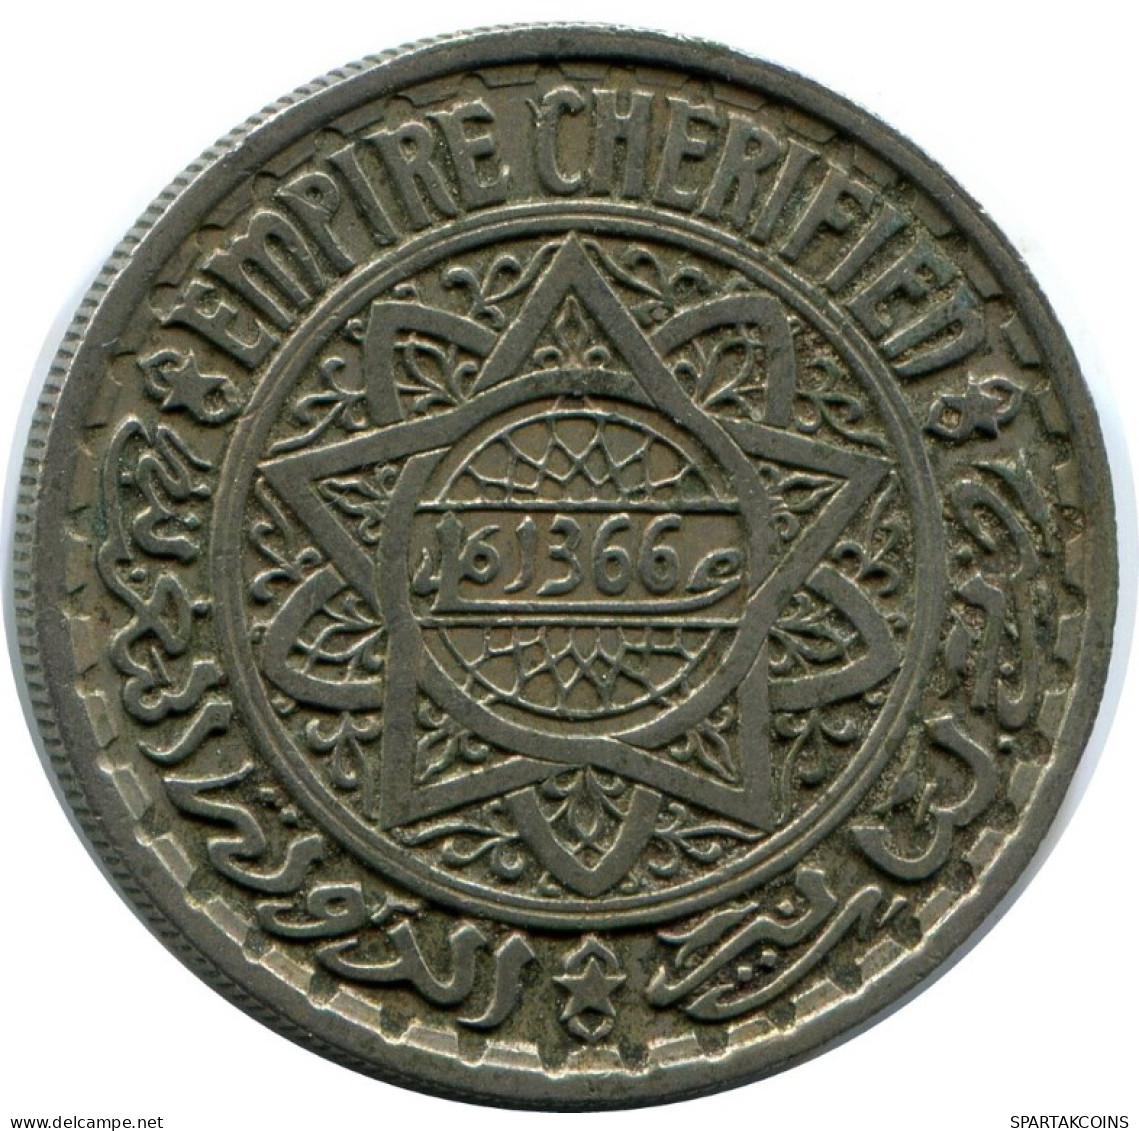 10 FRANCS 1952 MOROCCO Islamisch Münze #AH639.3.D.A - Marokko